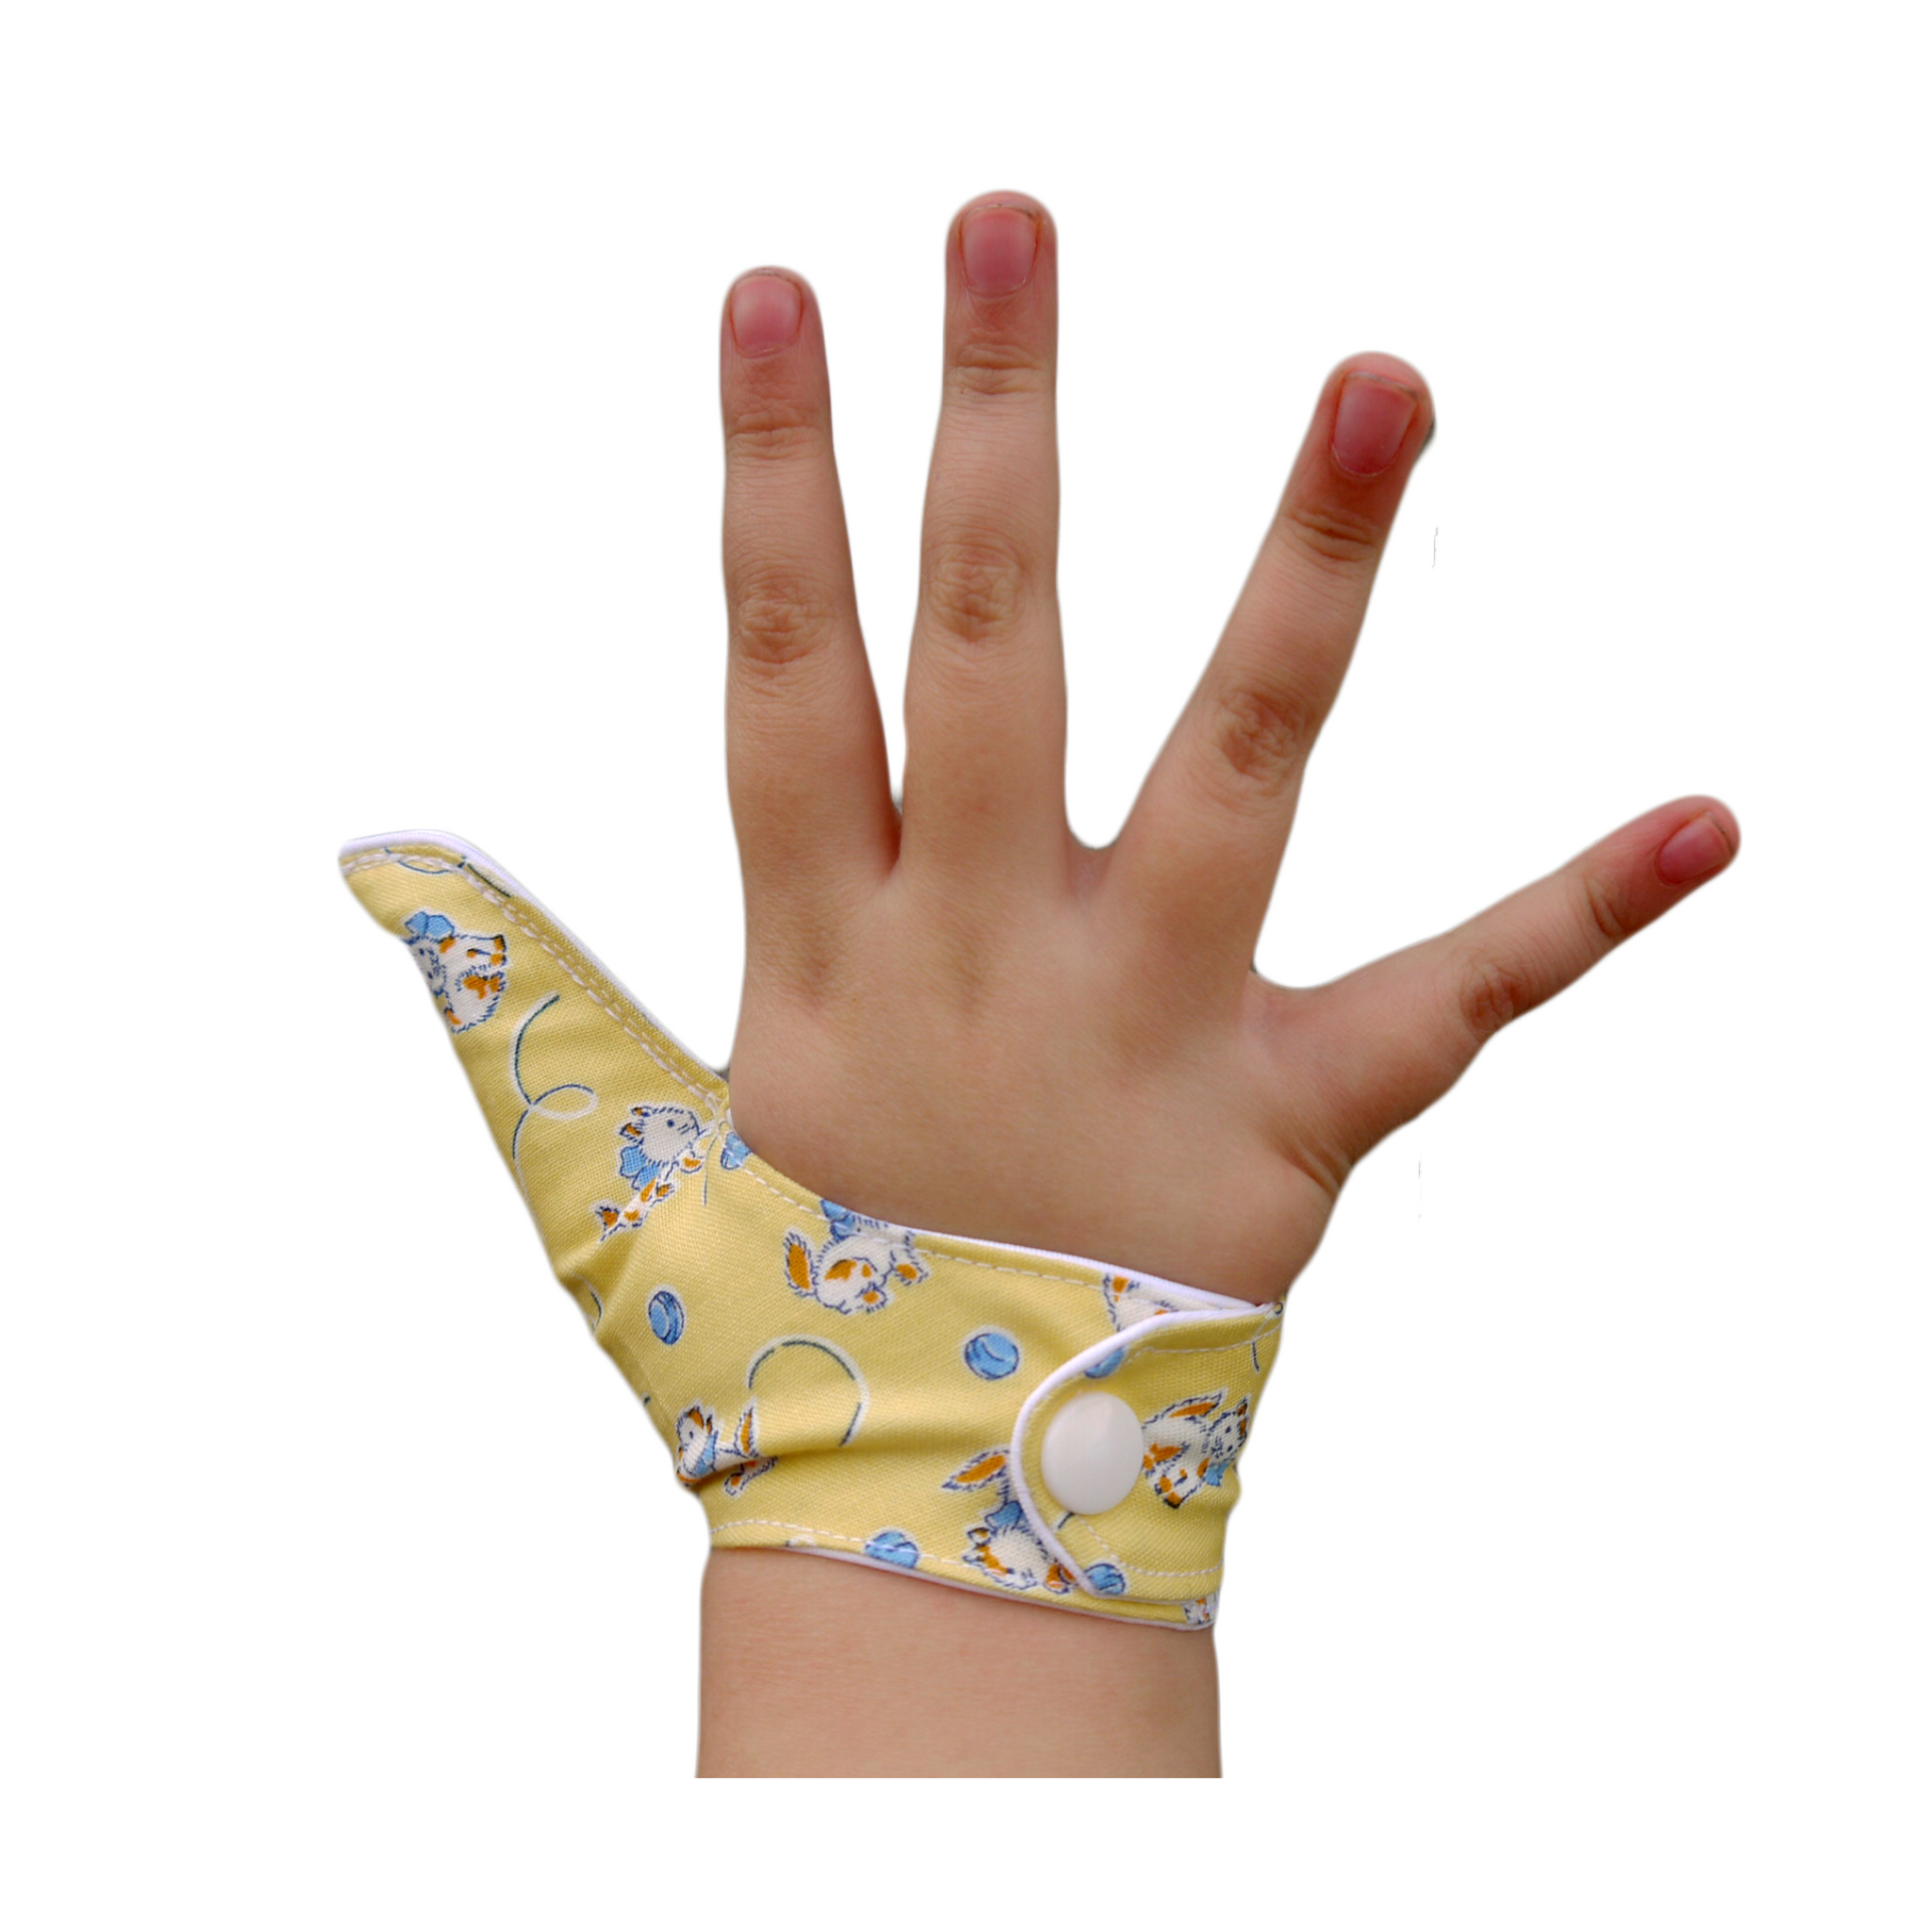 Thumb guard. Stop thumb sucking thumb glove. Kitten (yellow) themed. A –  The Thumb Guard Store